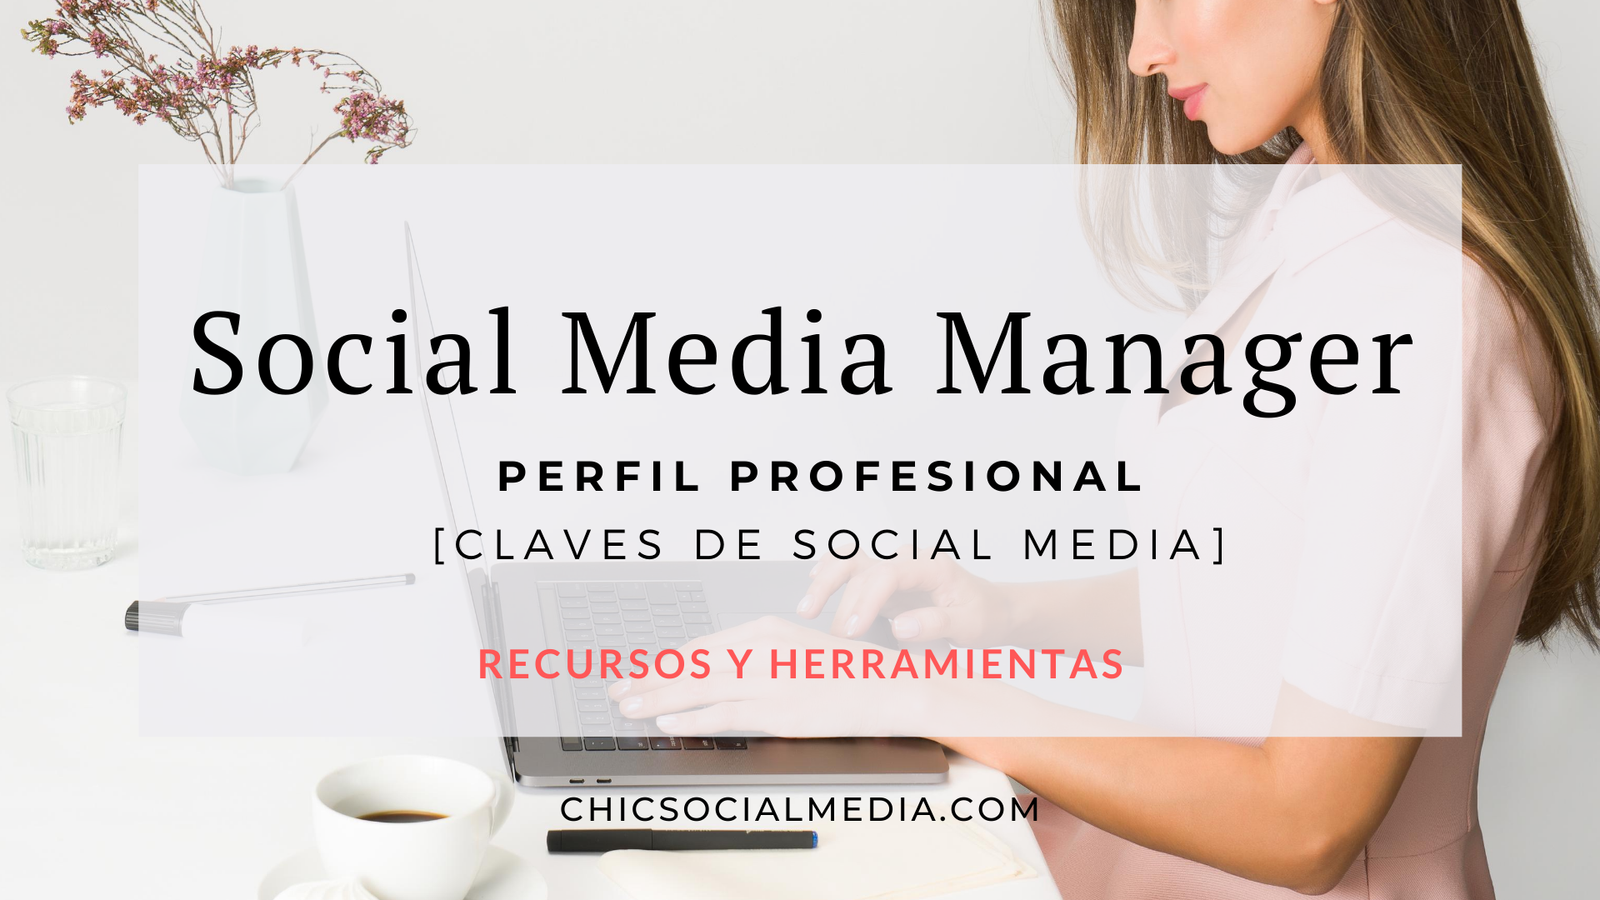 Chic Social Media Blog. Social Media Manager. Perfil Profesional.